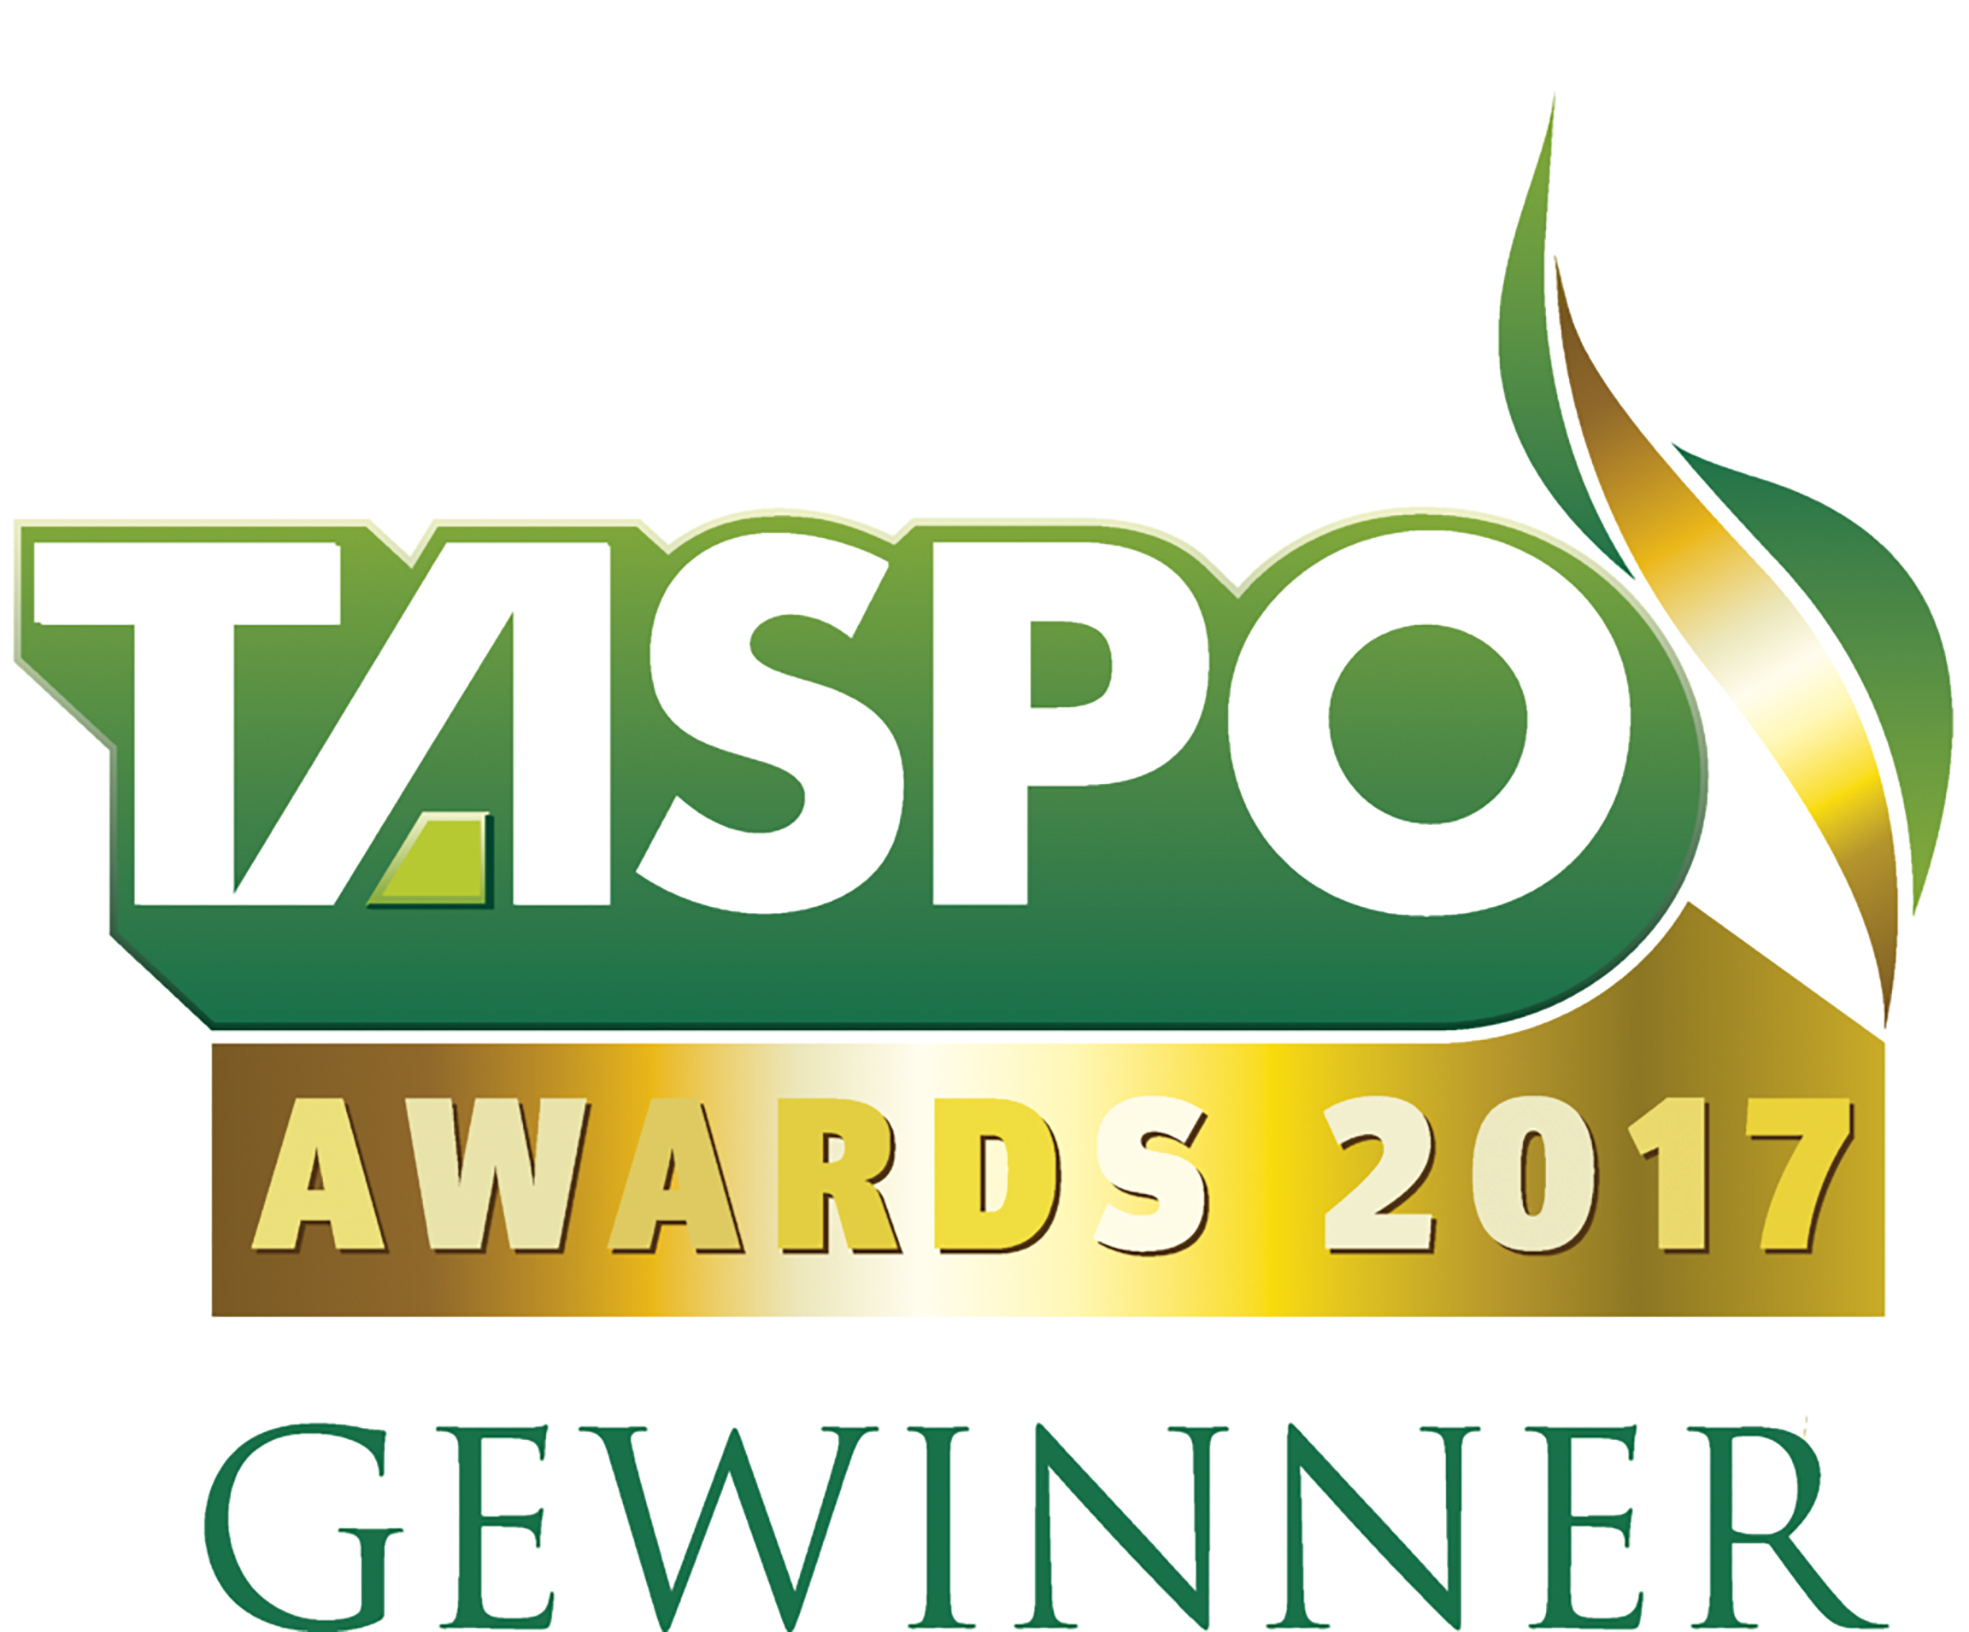 Akku-Karrenspritze 130 Liter, Taspo Award